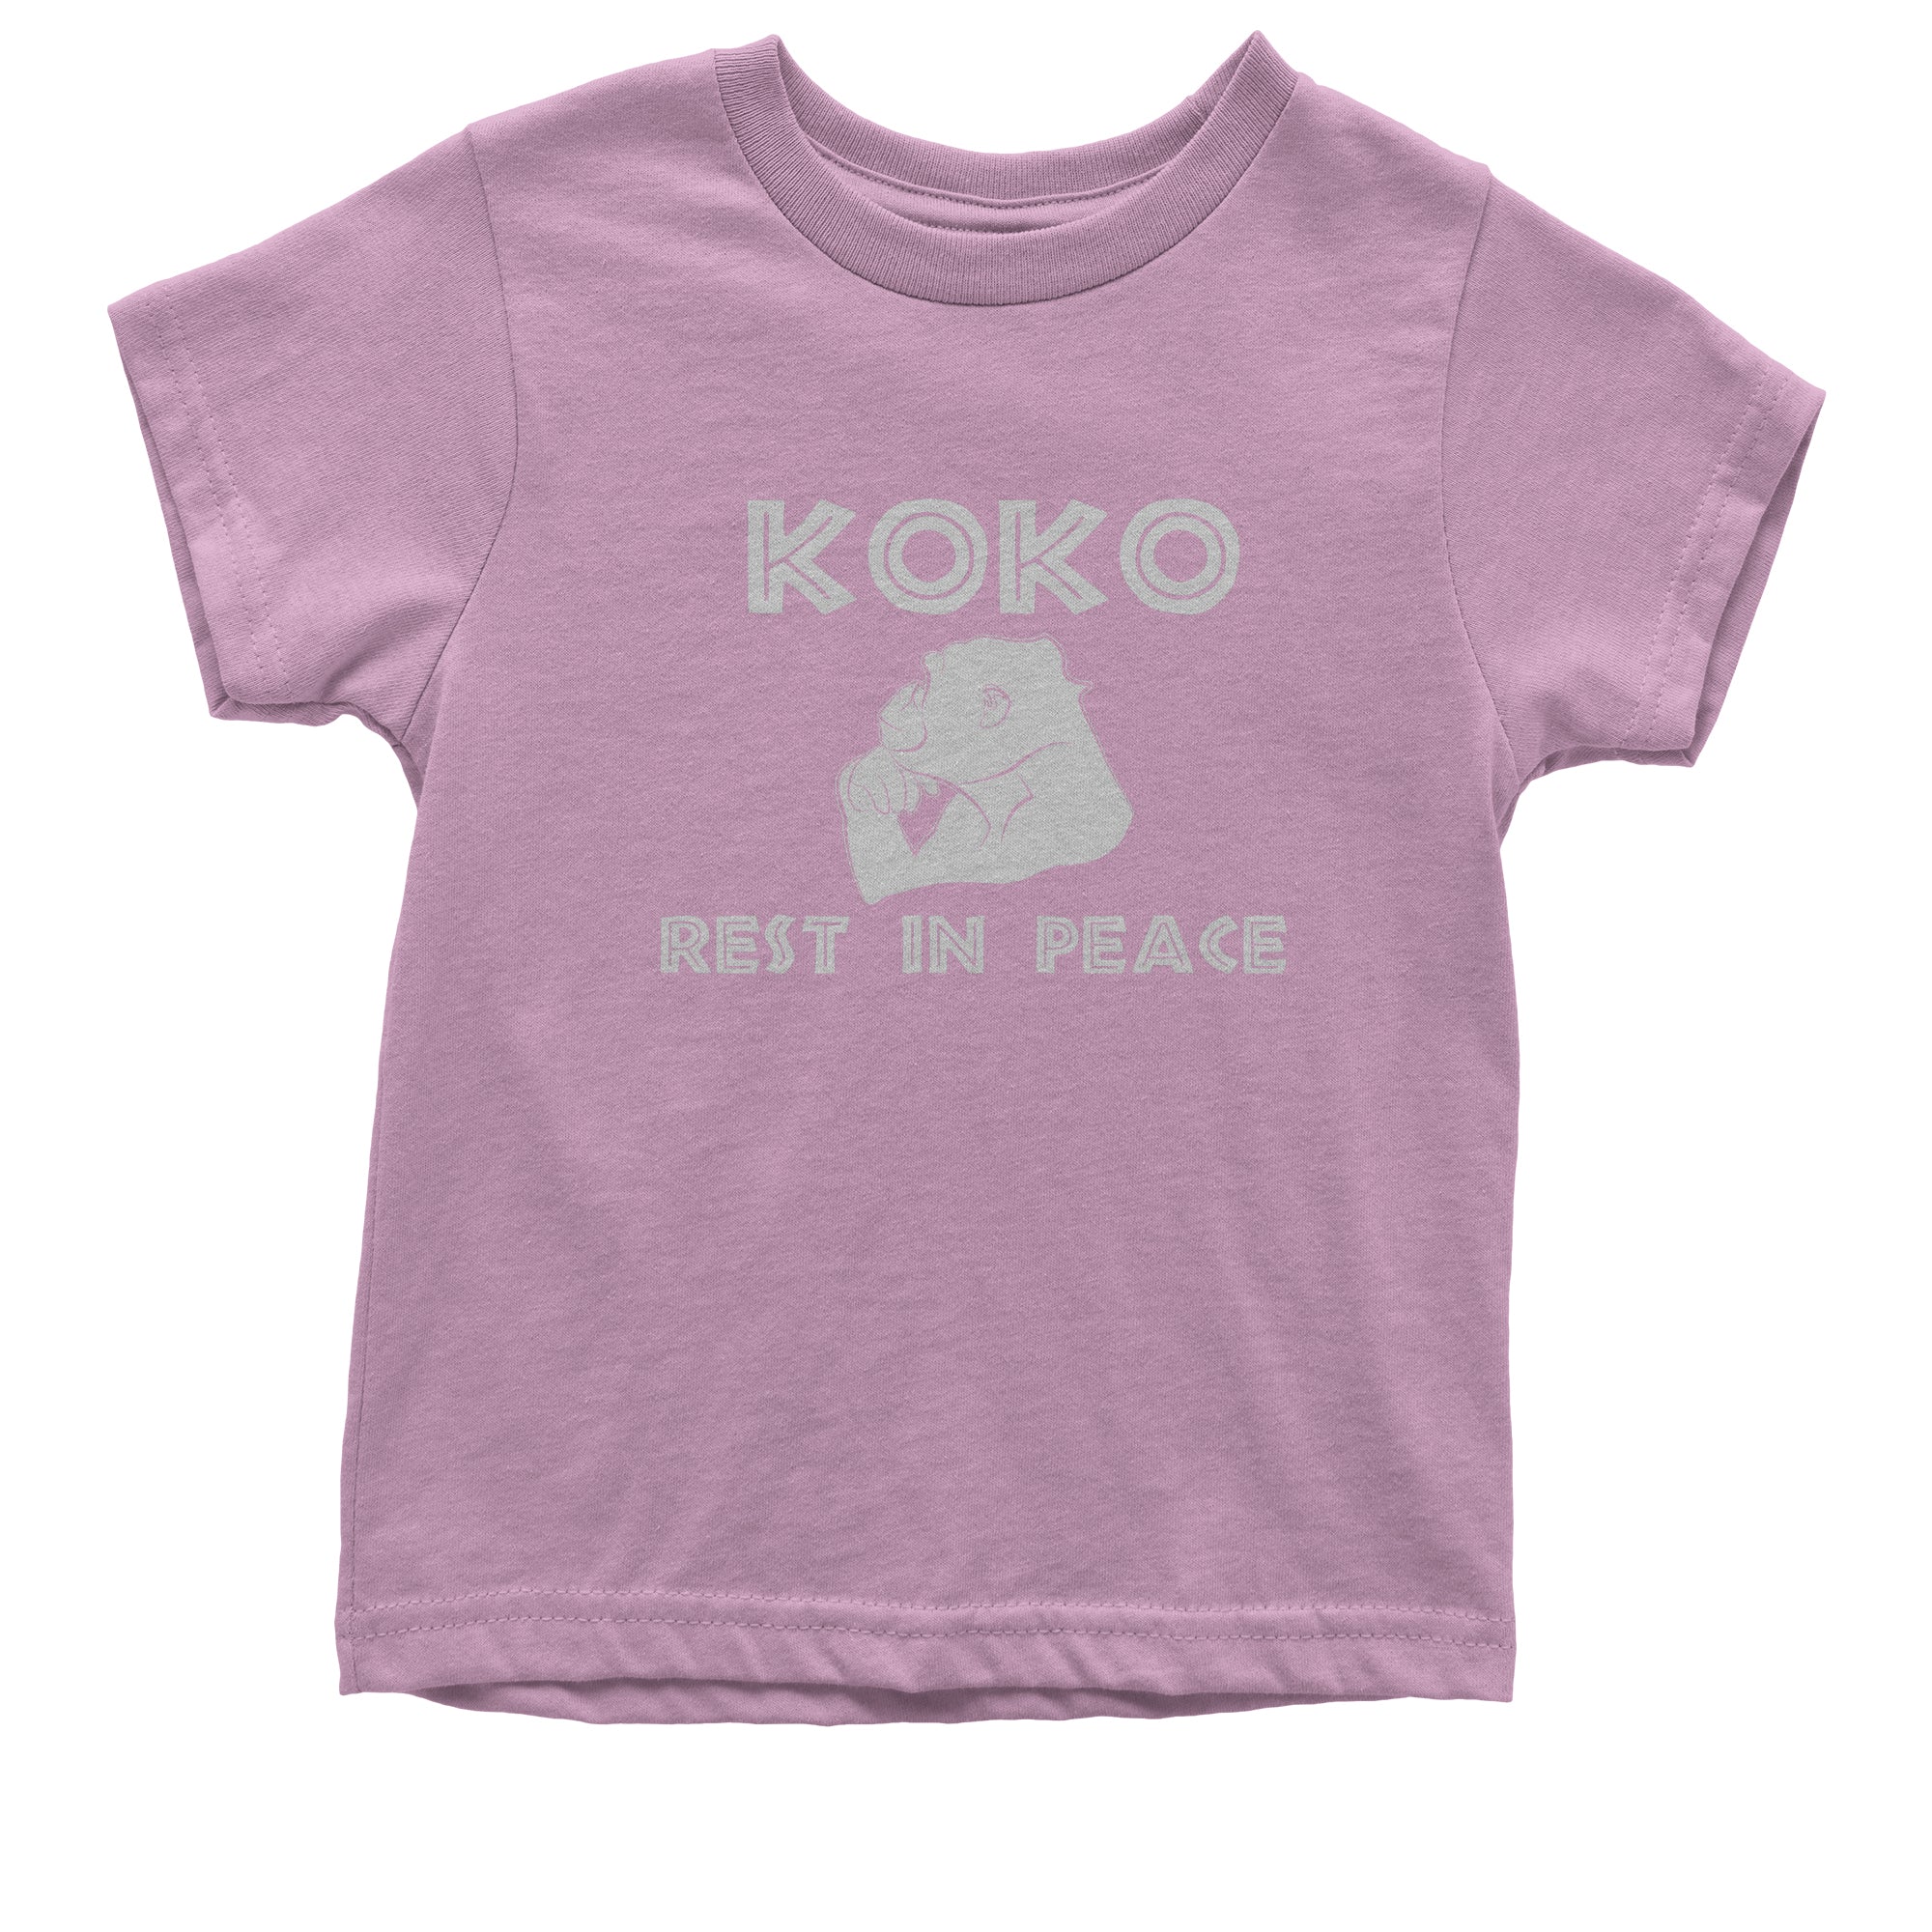 Koko the Talking Gorilla Rest in Peace Kid's T-Shirt